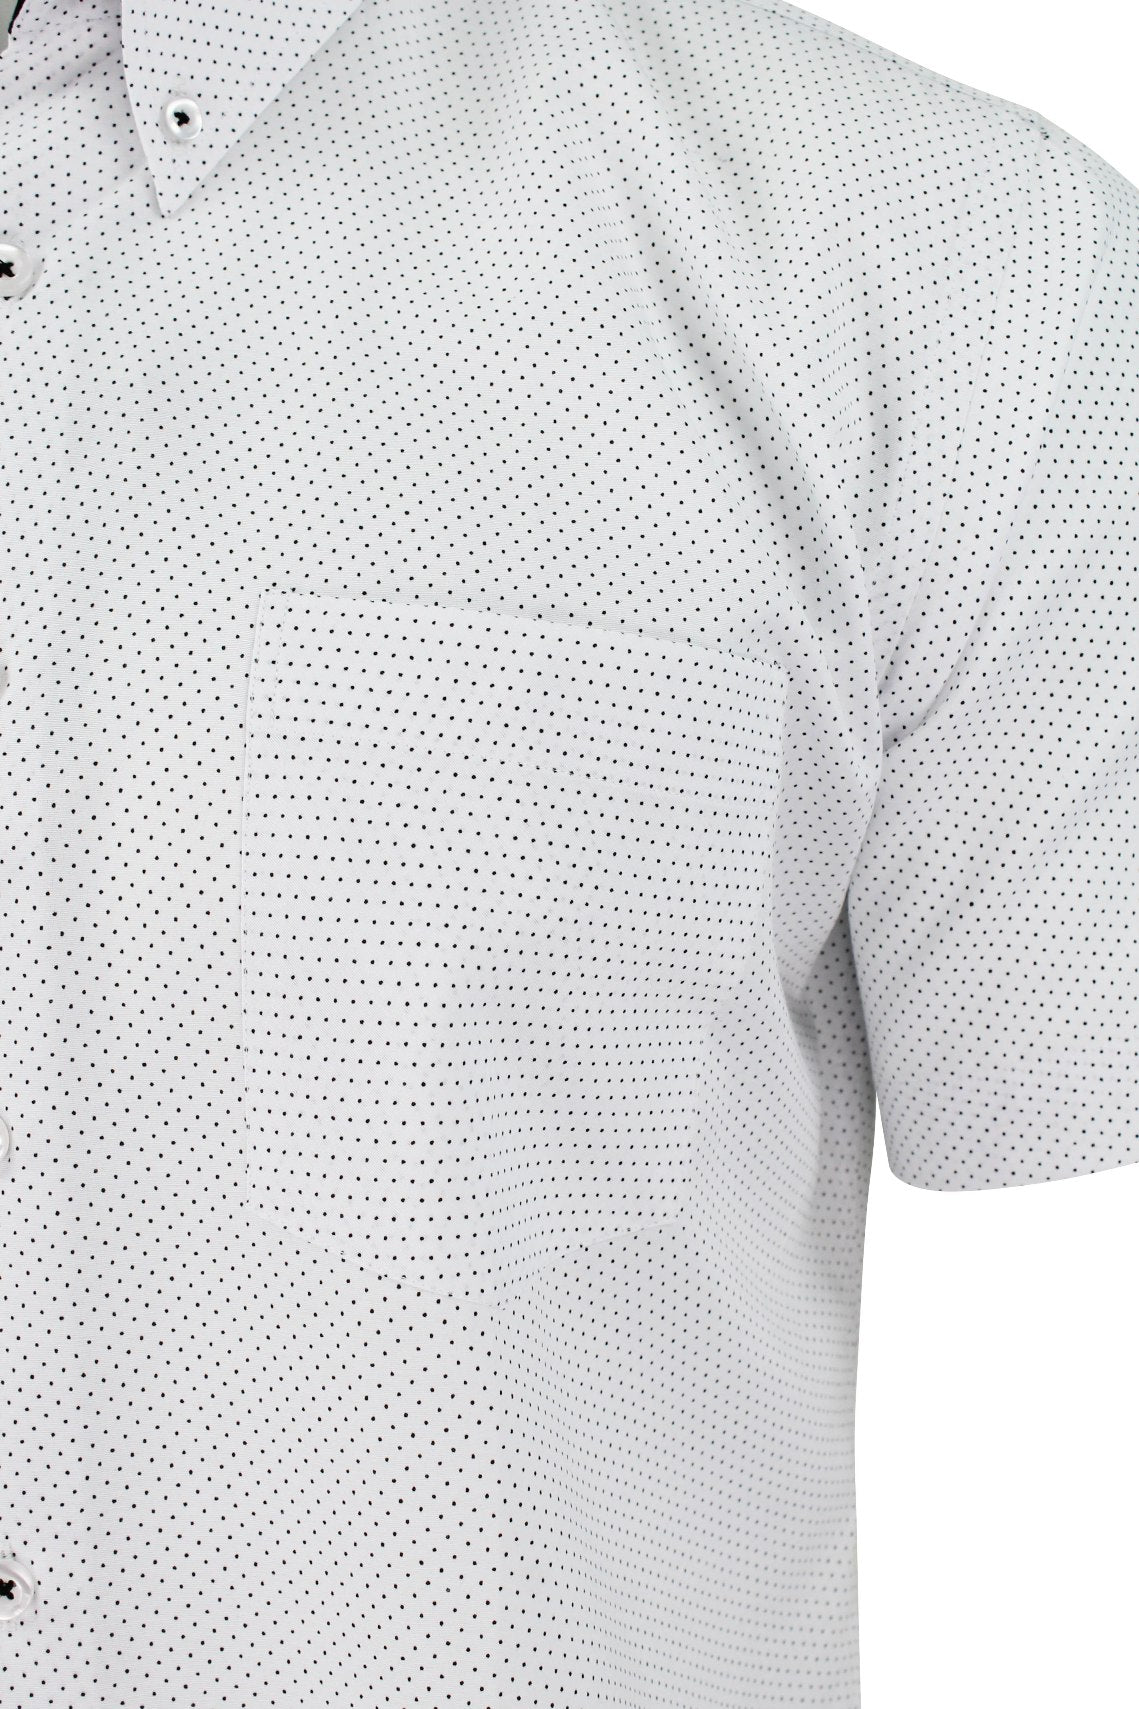 Mens Short Sleeved Shirt by Xact Clothing Mini Polka Dot-2